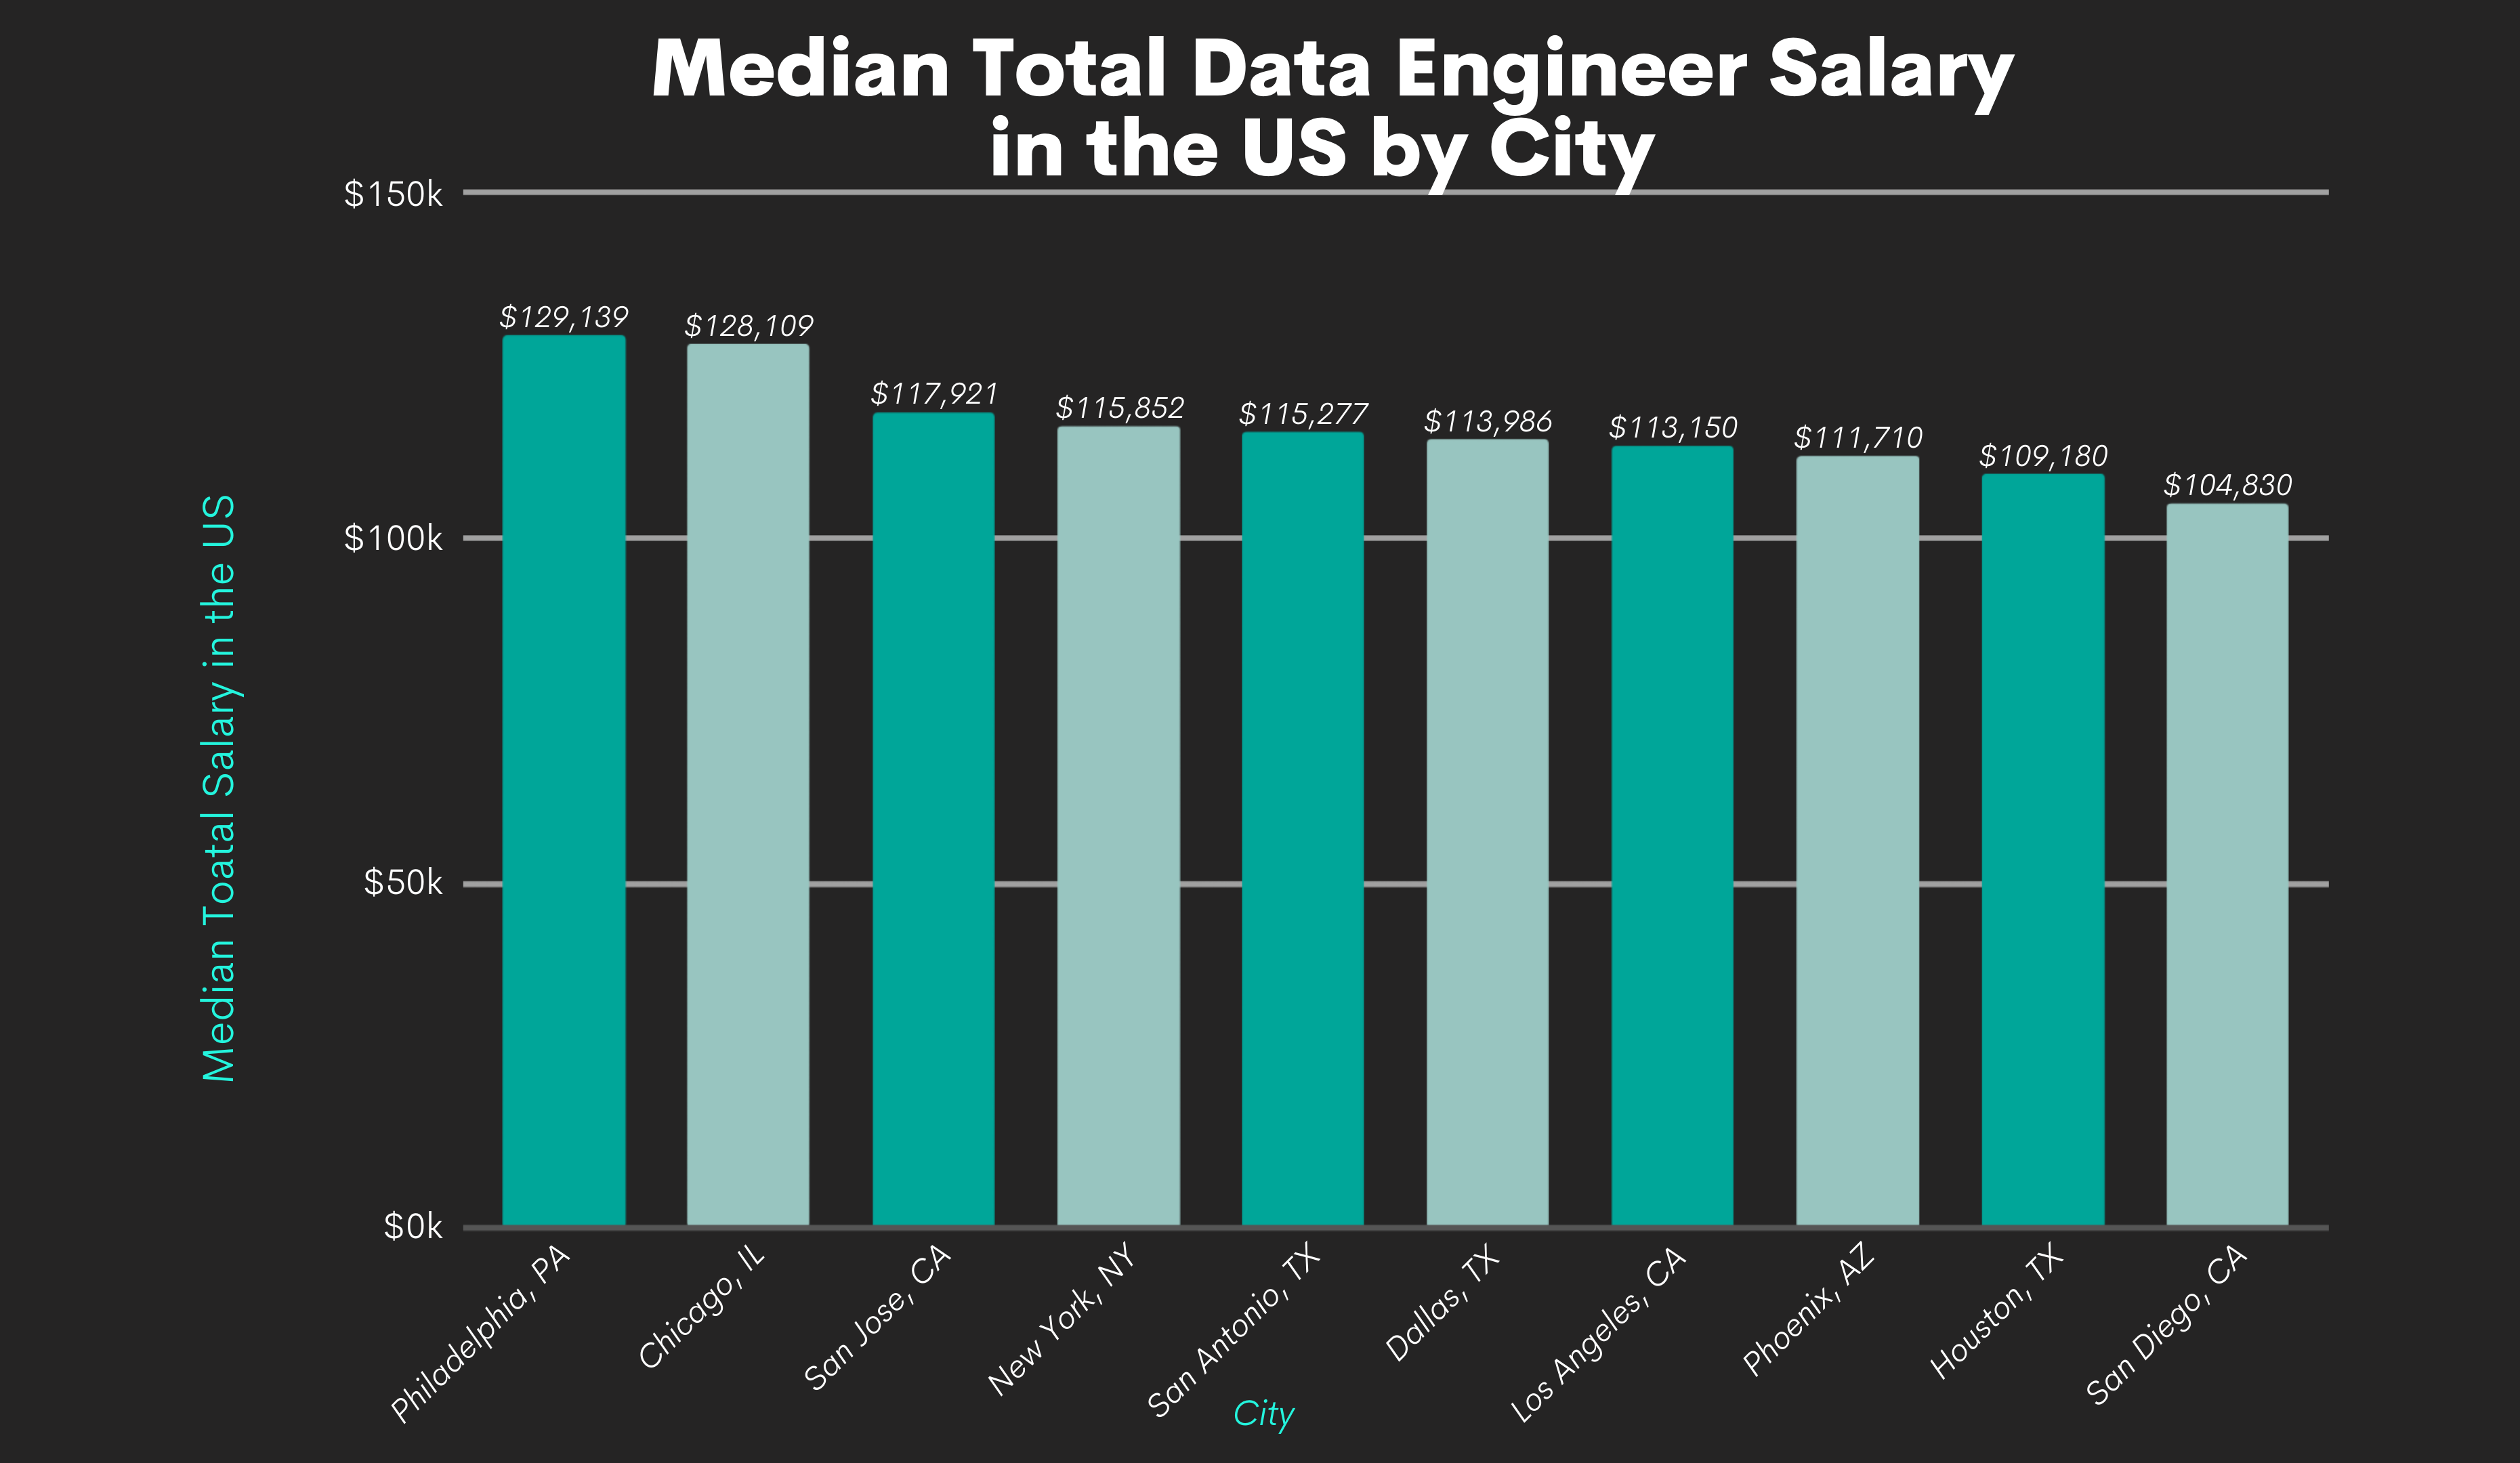 Data Engineer Salaries by City